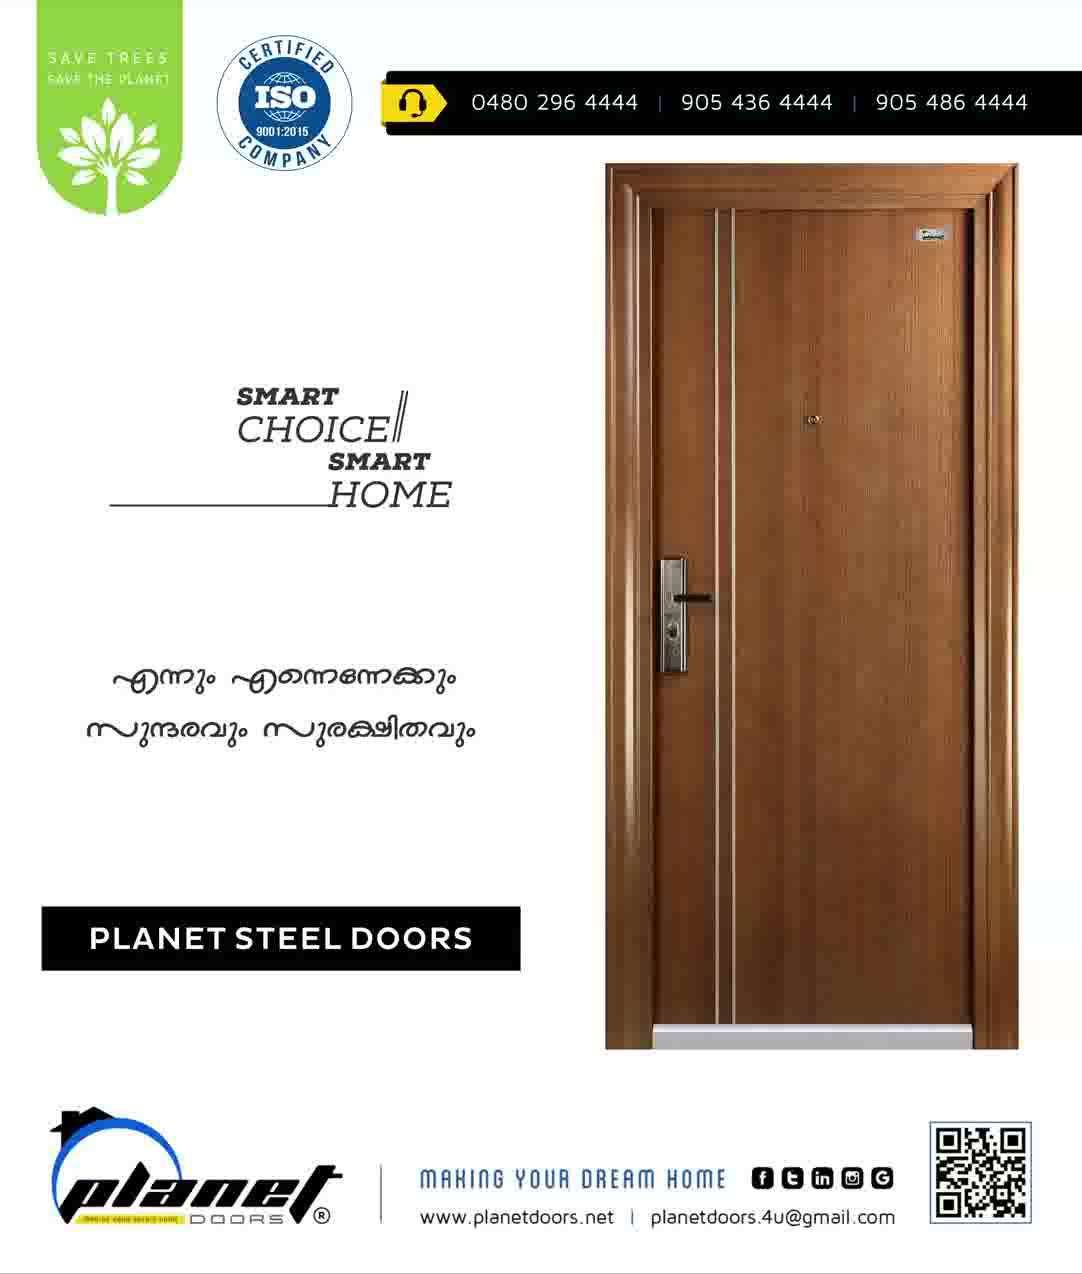 PLANET DOORS 🚪 MAKING YOUR DREAM HOME 🏡

എന്നും എന്നെന്നേക്കും സുന്ദരവും സുരക്ഷിതവും

/// SMART CHOICE, SMART HOME ///

OUR PREMIUM PRODUCTS...

✔️ STEEL DOORS

✔️ PVC DESIGNER GLASS DOORS

✔️ uPVC DESIGNER DOORS

✔️ FRP DOORS

✔️ MINI PVC GLASS DOORS

✔️ MOULDED PANEL DOORS

✔️ CURTAIN BLINDS 

കേരളത്തിലുടനീളം വിതരണ ശൃംഖലയും വില്പനാനന്തര സേവനവും. 

👉 For more details contact us: 04802964444 - 9054364444 - 9054864444.

👉 https://wa.me/919054364444 - https://wa.me/919054864444






#planetdoors #thrissur #kerala 

#doors #pvcdoors #upvcdoors #frpdoors #fiberdoors #mouldeddoors #skindoors #paneldoors #glassdoors #steeldoors #decorativedoors #bathroomdoors #bedroomdoors #kitchendoors #curtain #blinds #windows #home #decor #interior